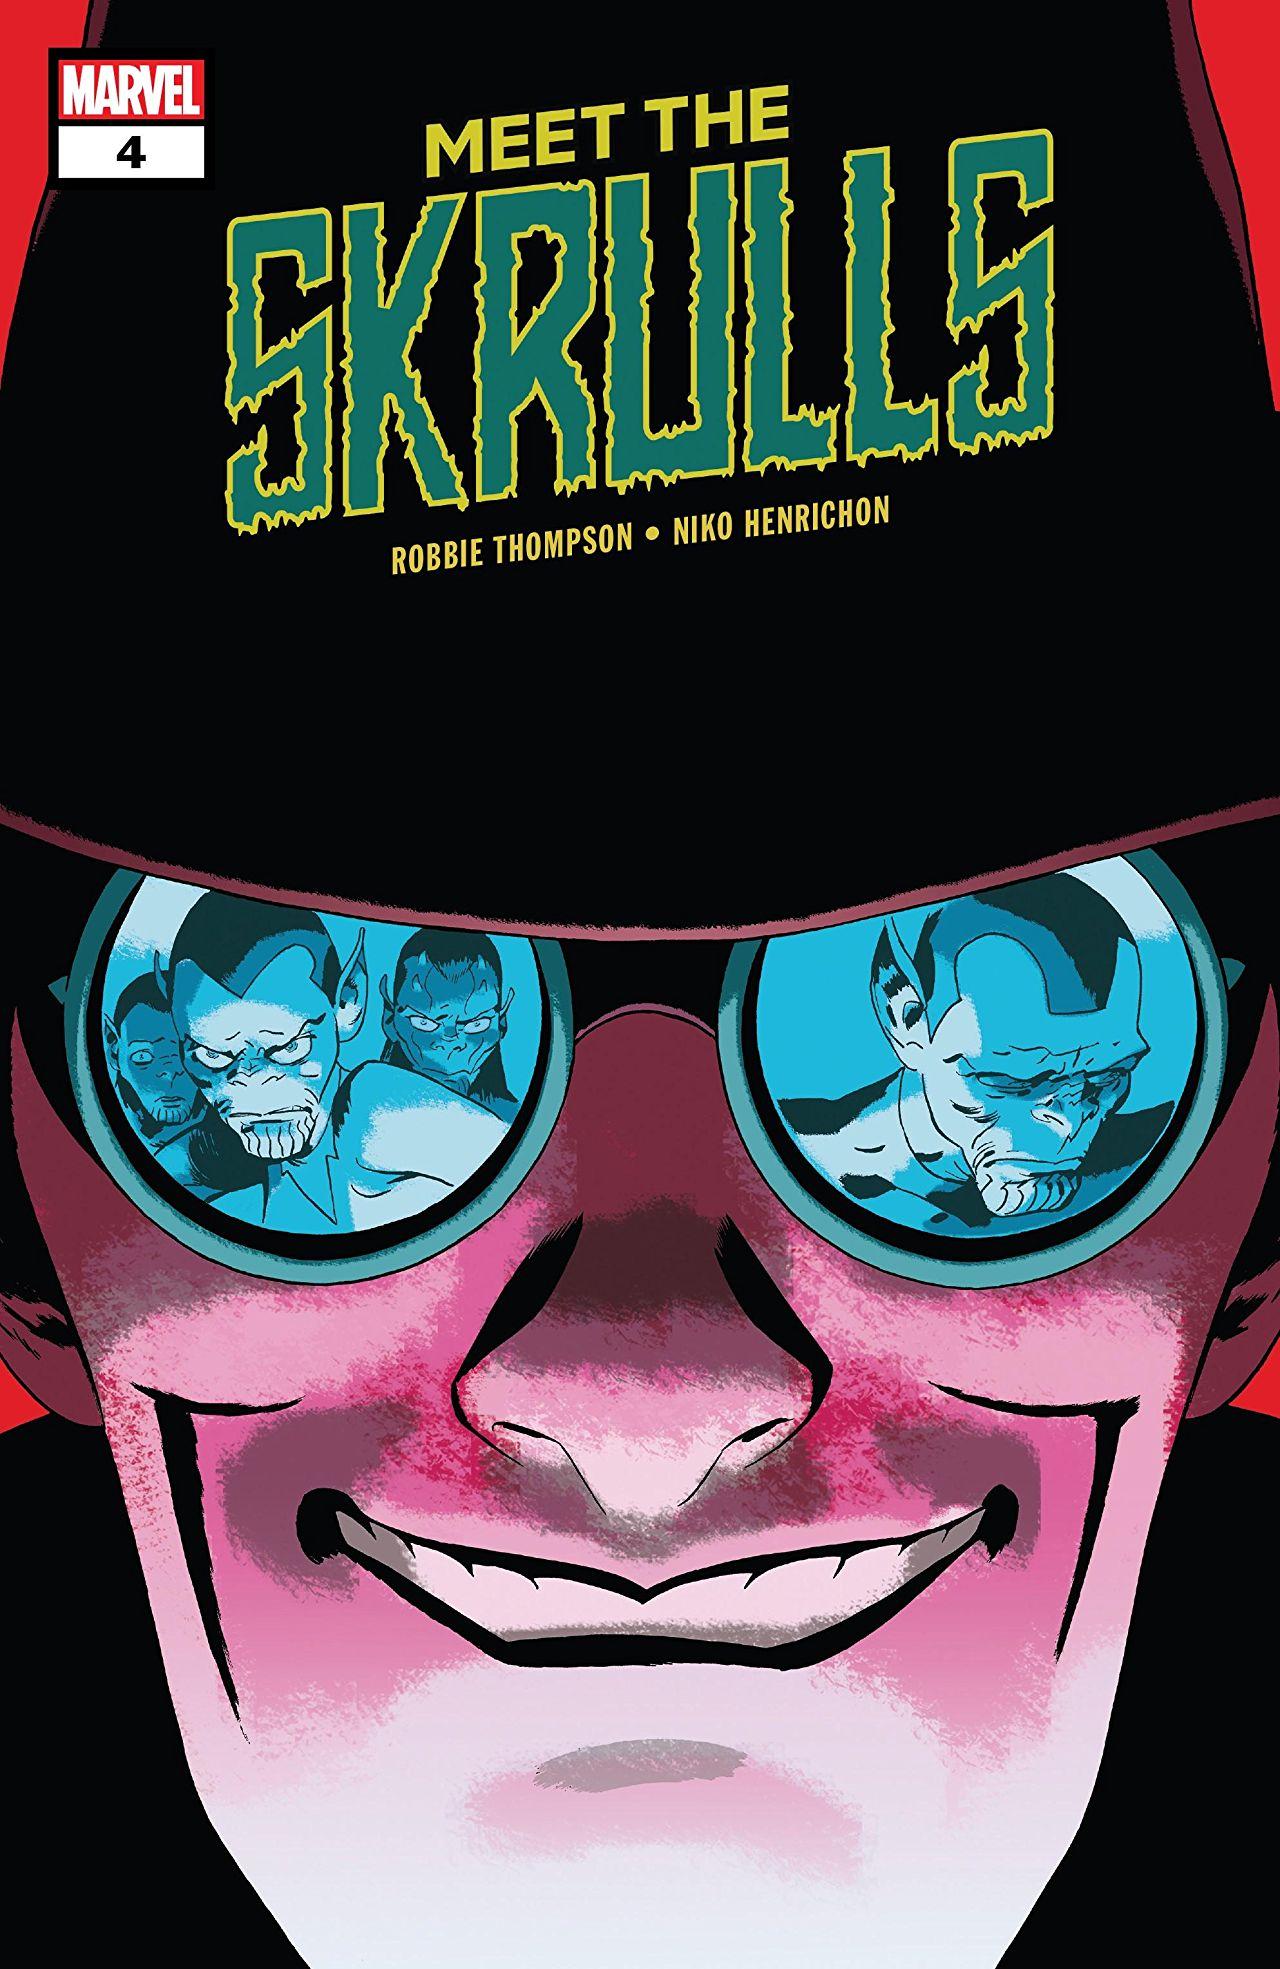 Meet the Skrulls Vol. 1 #4